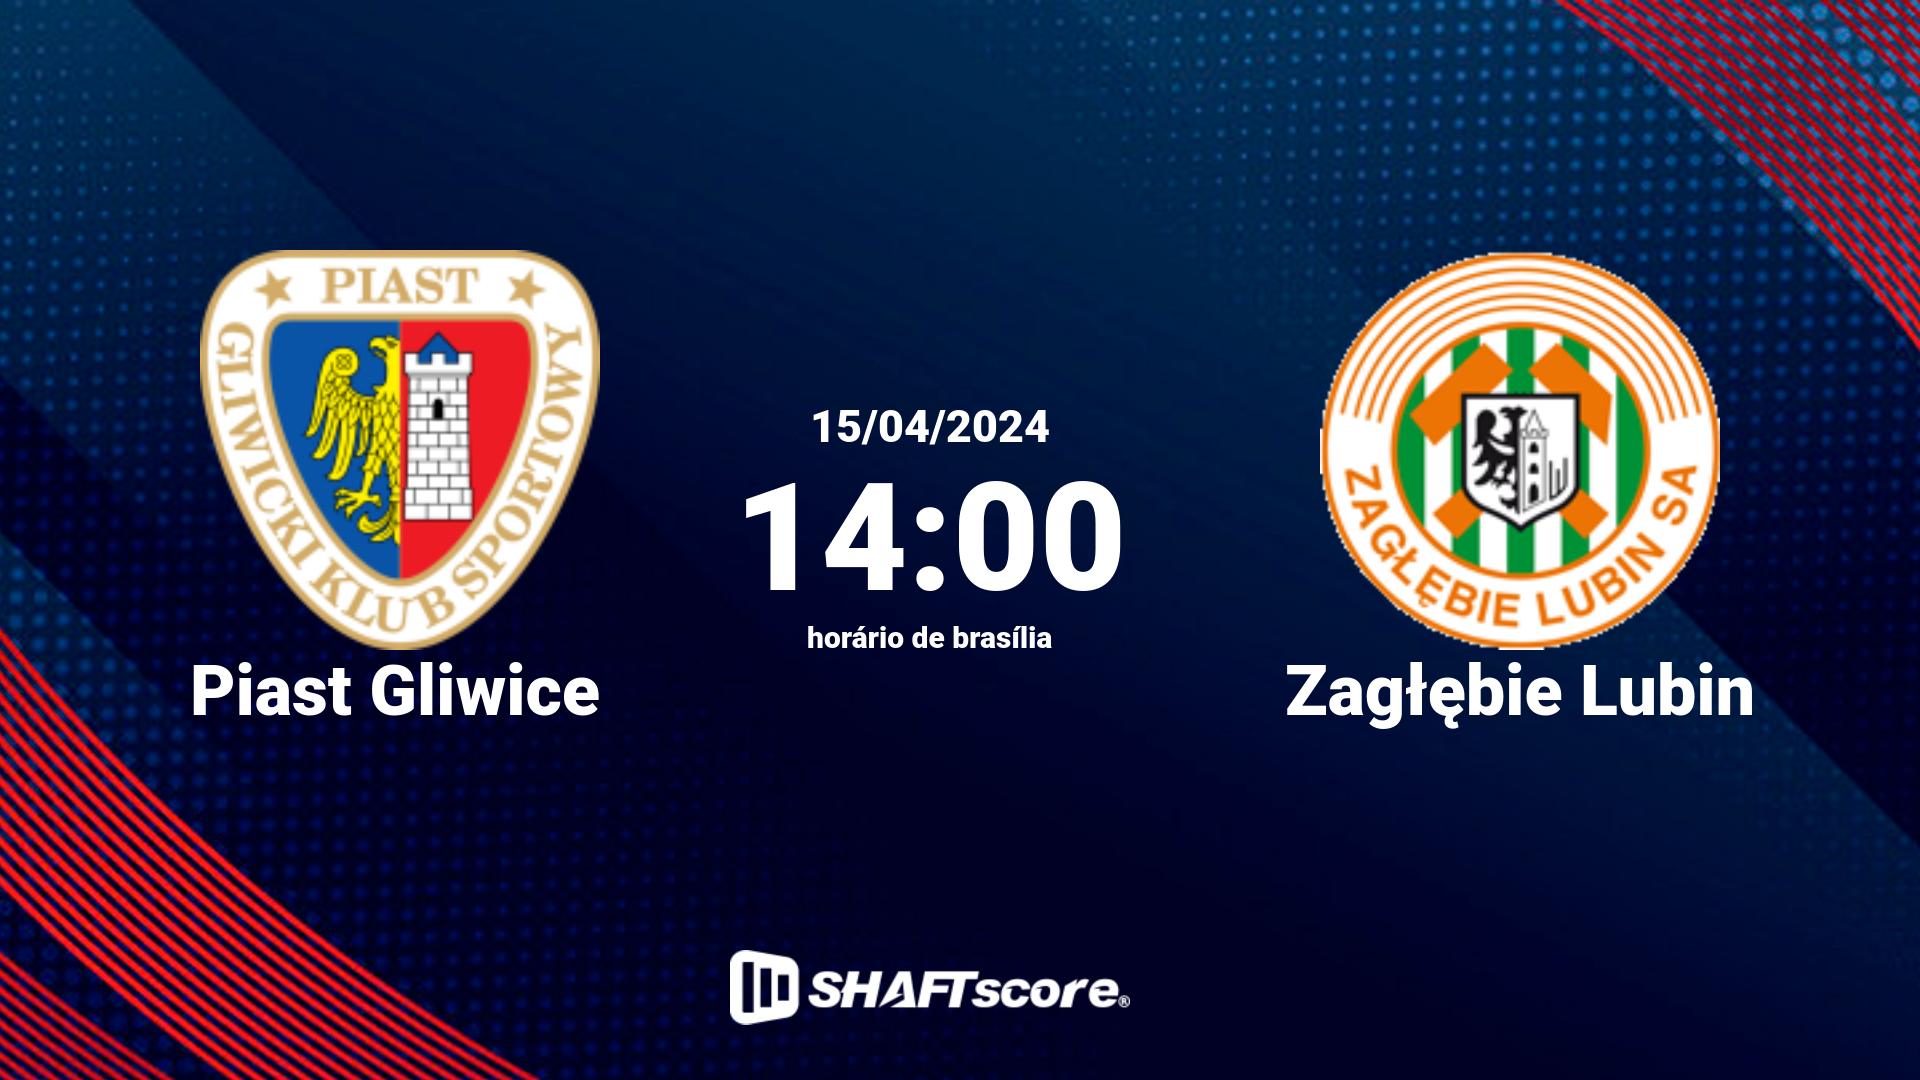 Estatísticas do jogo Piast Gliwice vs Zagłębie Lubin 15.04 14:00